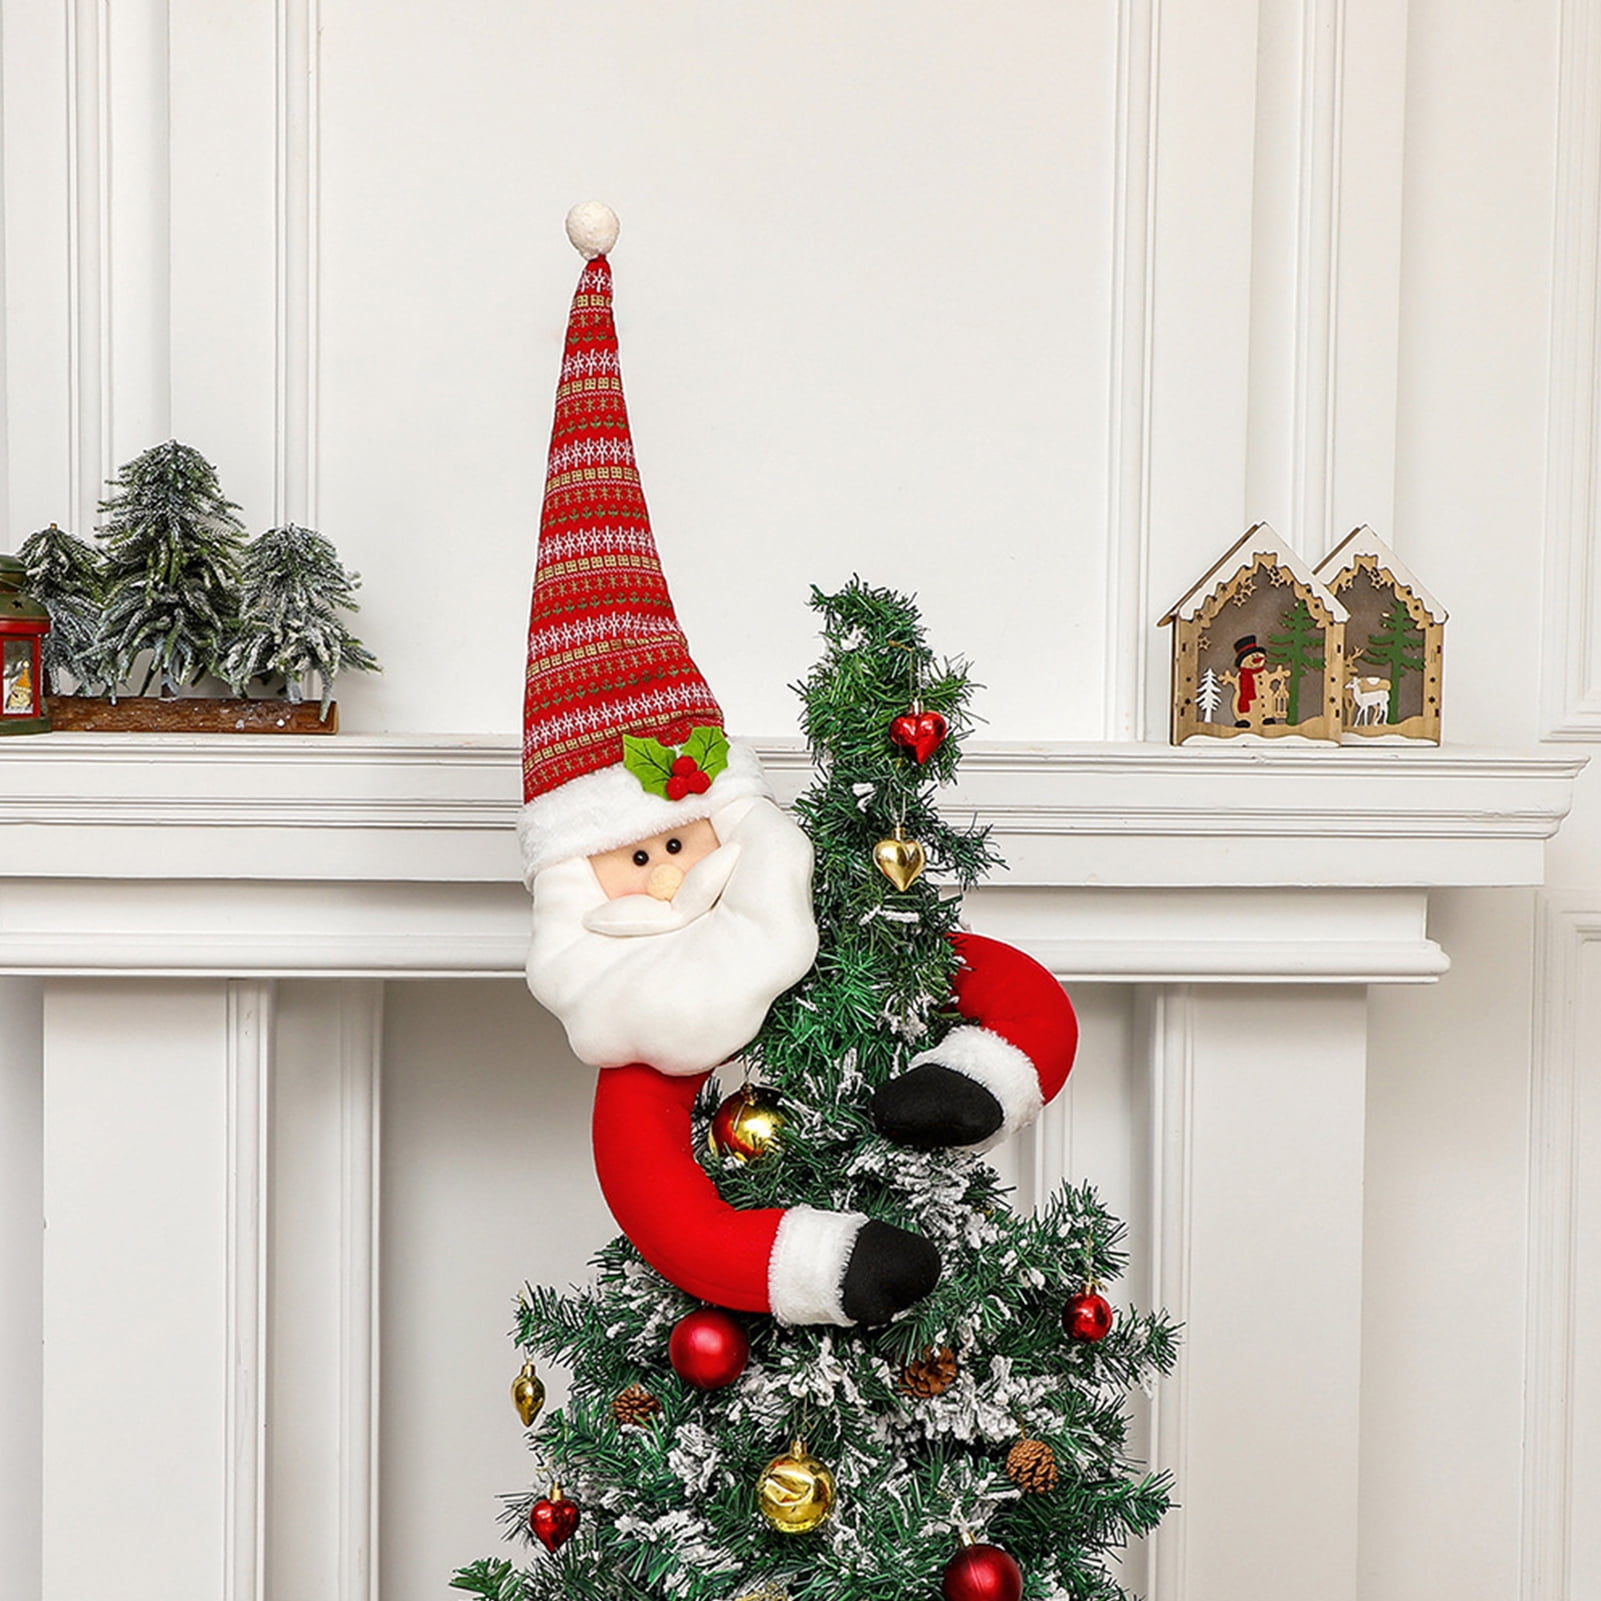 Lingouzi Christmas Tree Topper - Santa Claus Snowman Head, Arms and Legs  for Christmas Tree Decorations, Creative Christmas Tree Doll Topper for